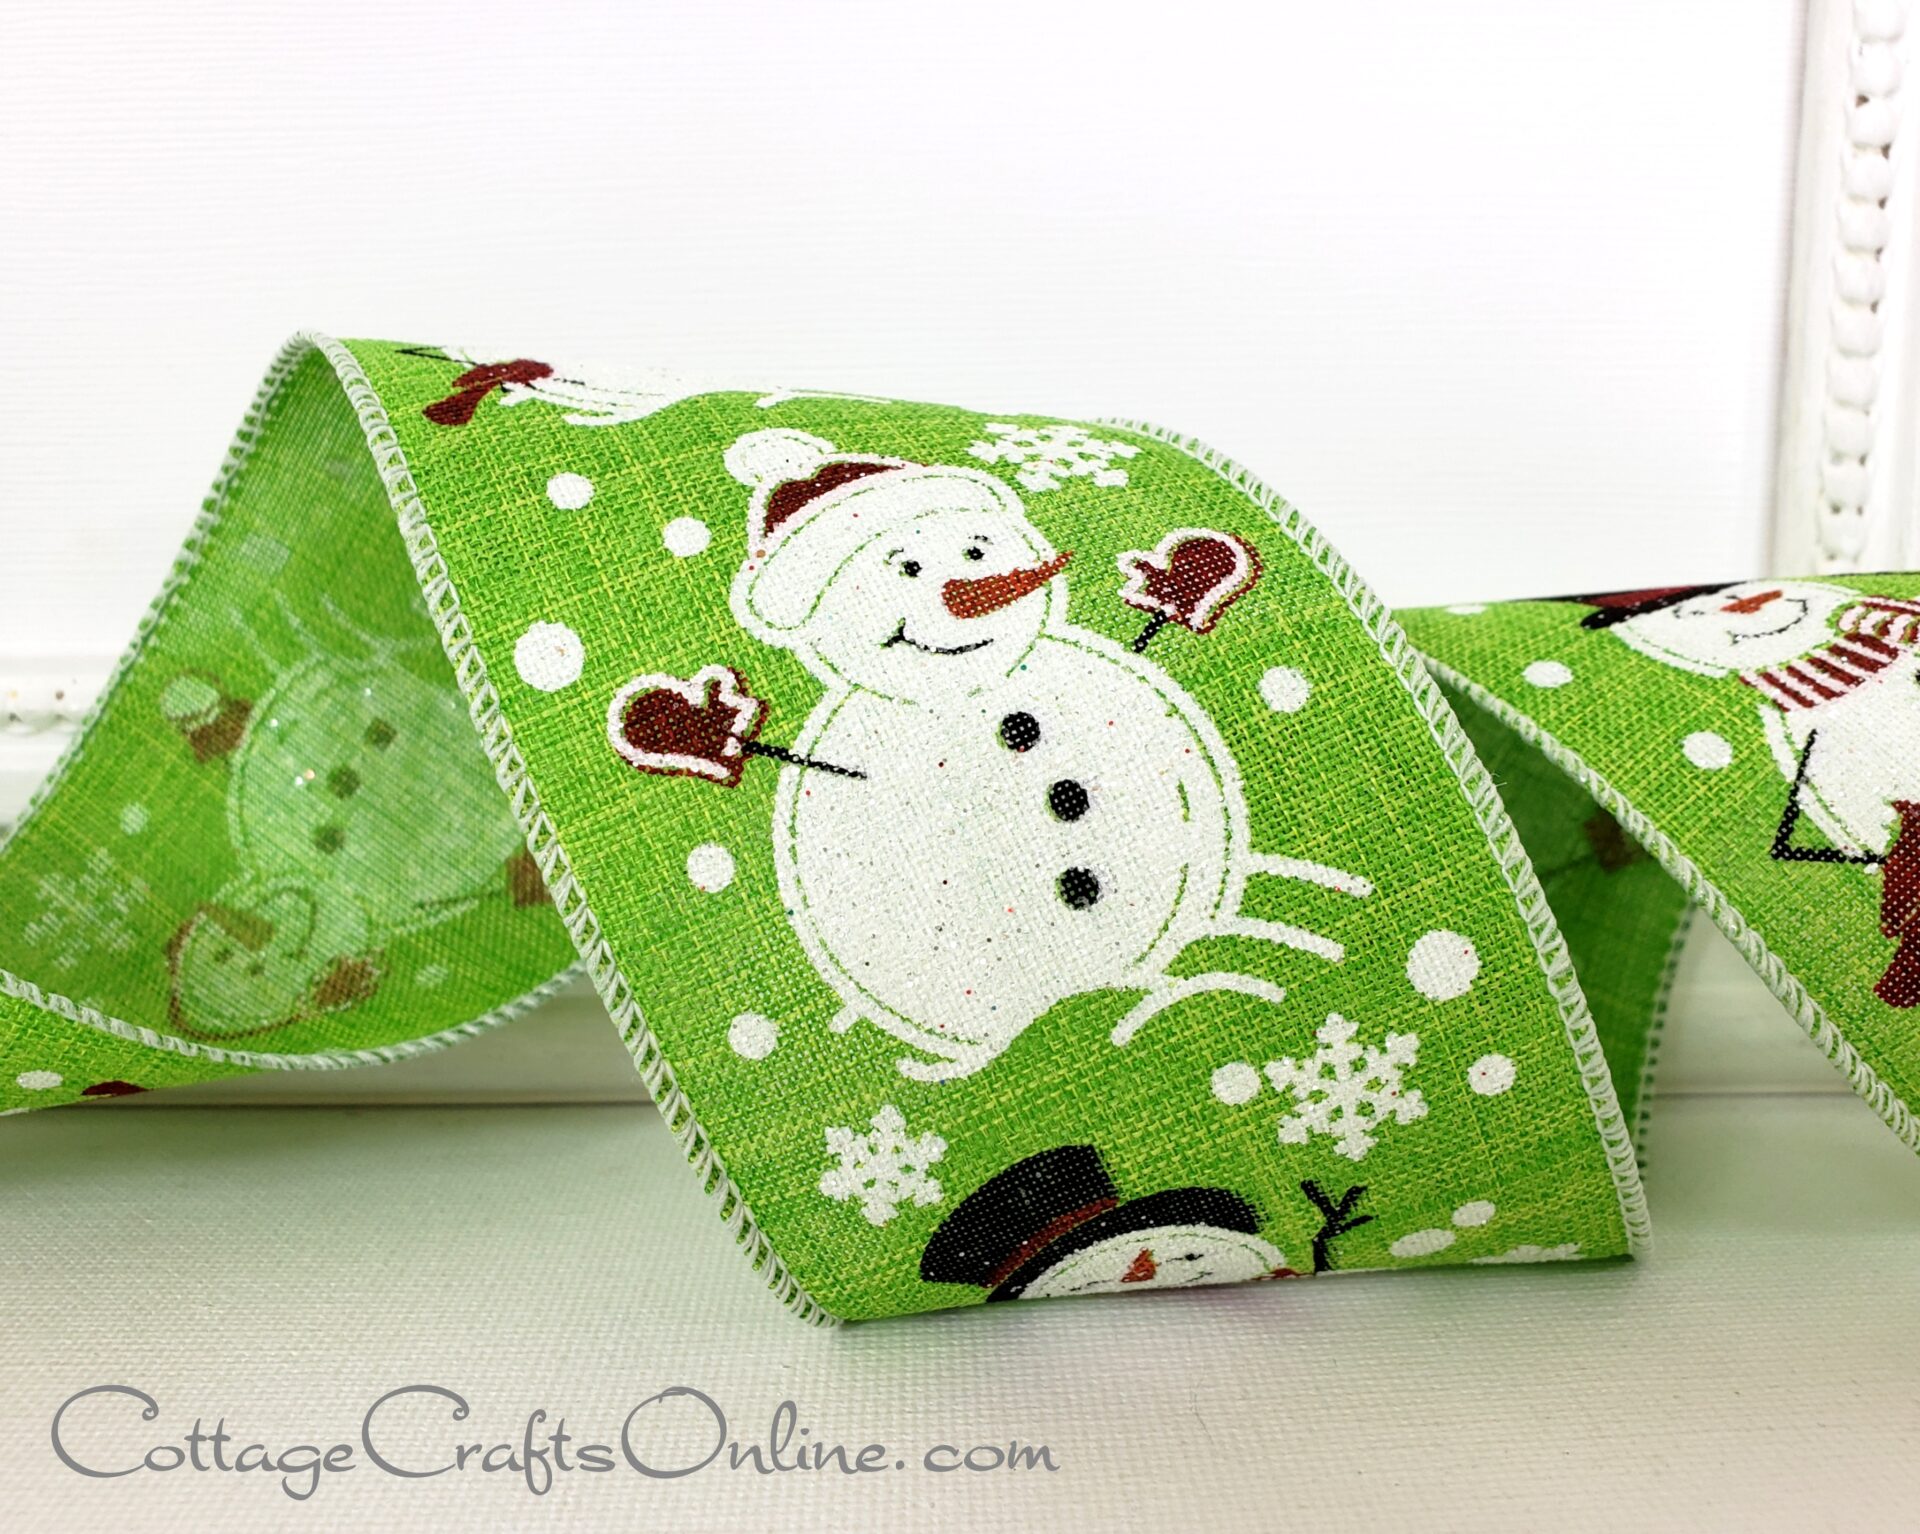 A lime green ribbon with snowman prints